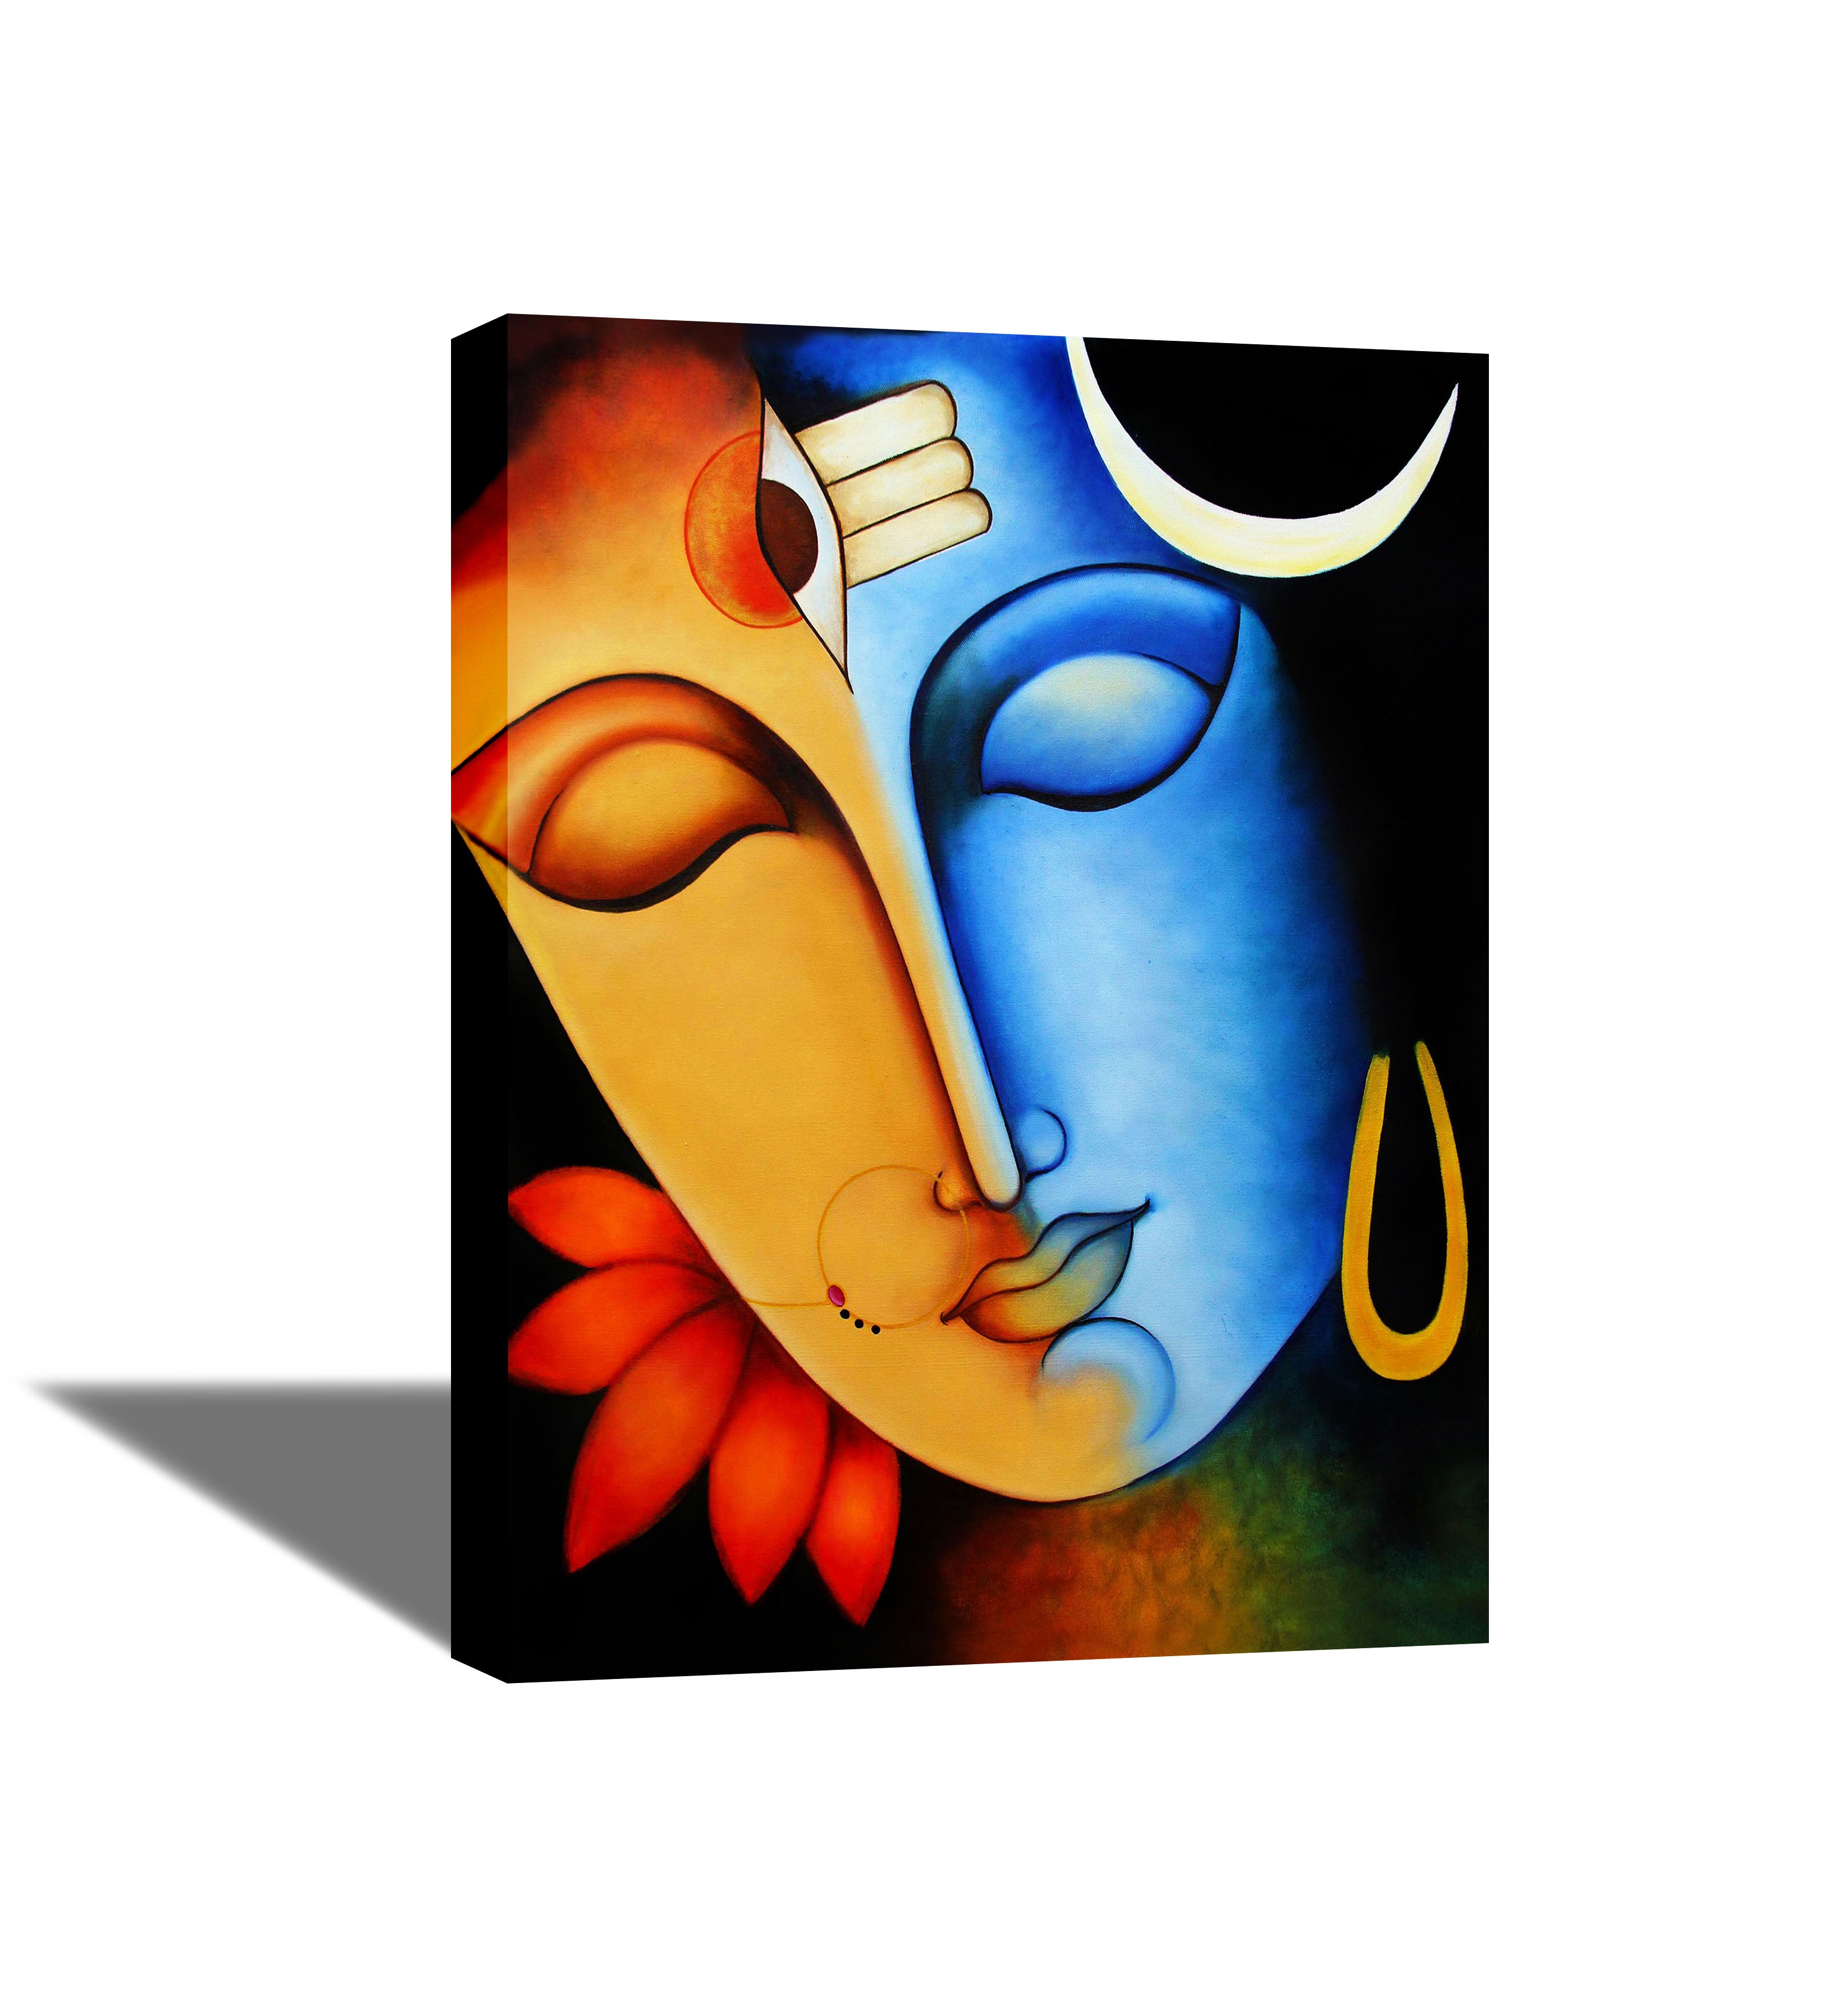 Shiva Parvati - Canvas Painting - Framed